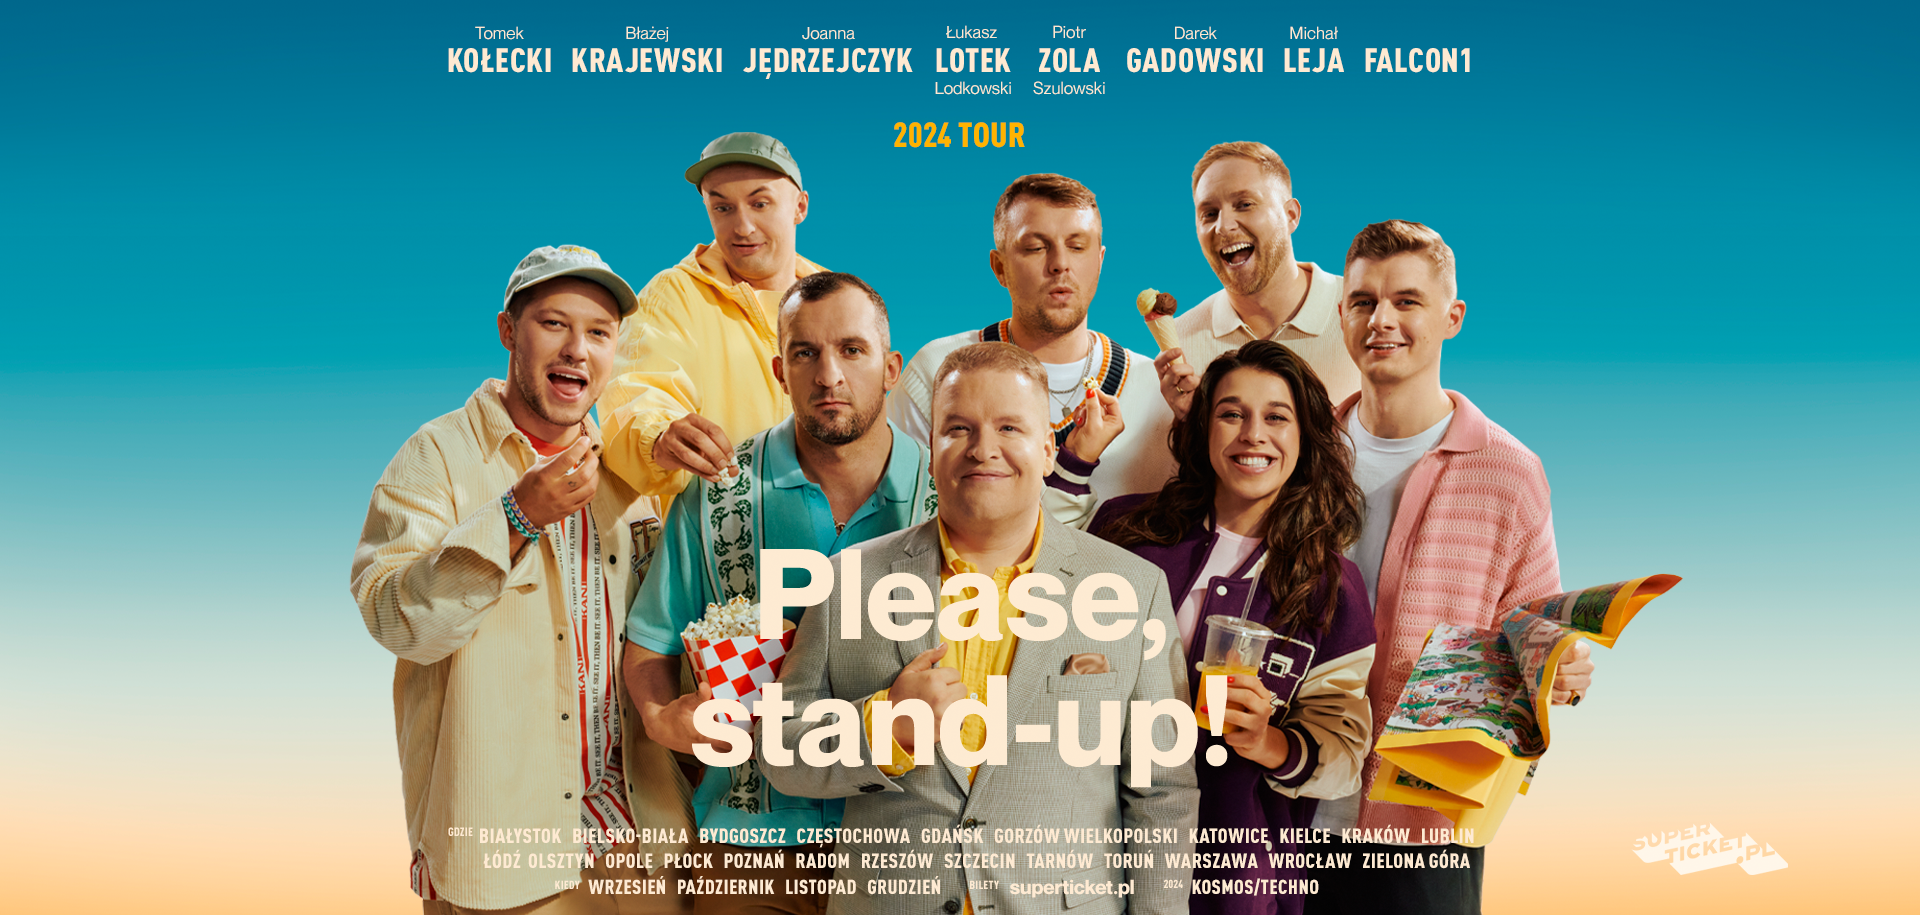 Please, Stand-up! Kielce 2024